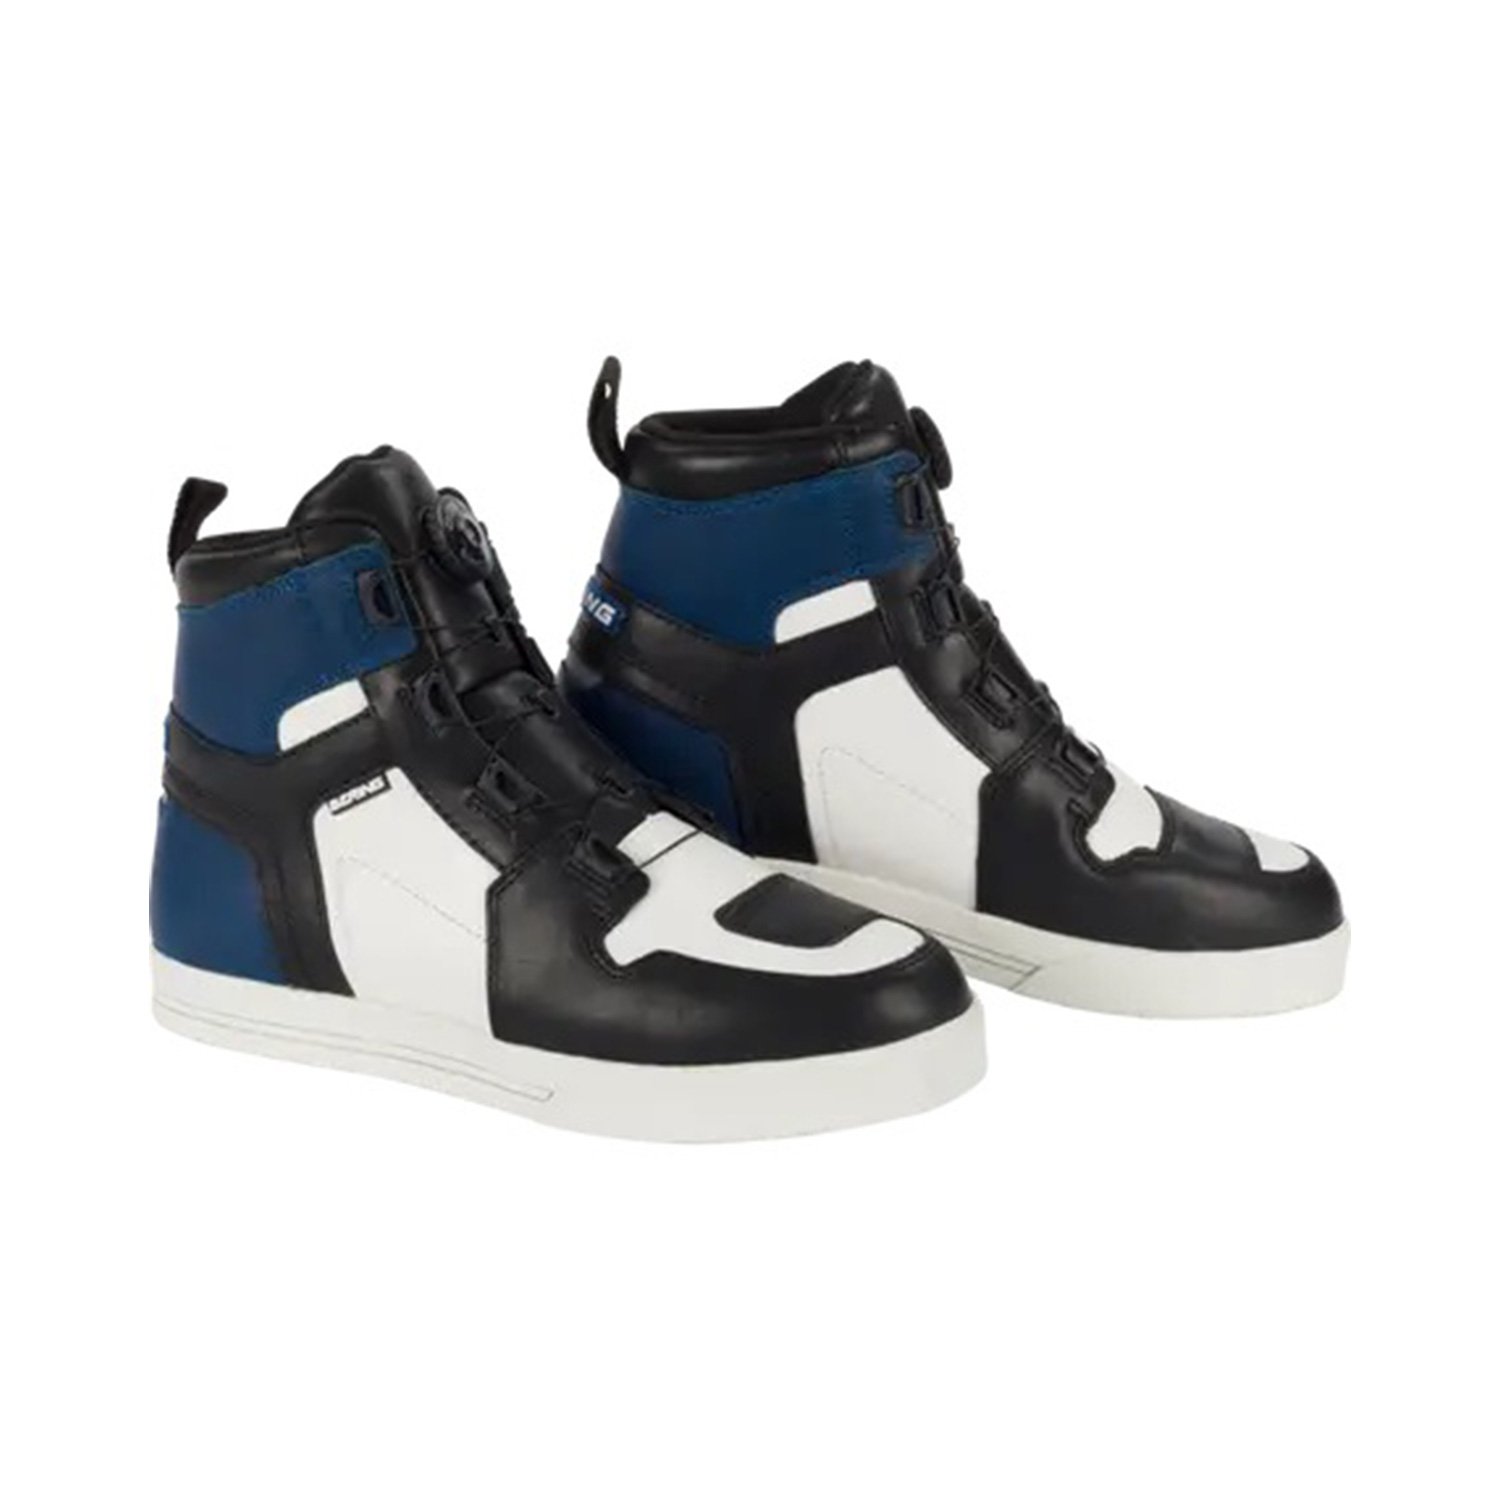 Image of Bering Sneakers Reflex A-Top Black White Blue Size 45 EN